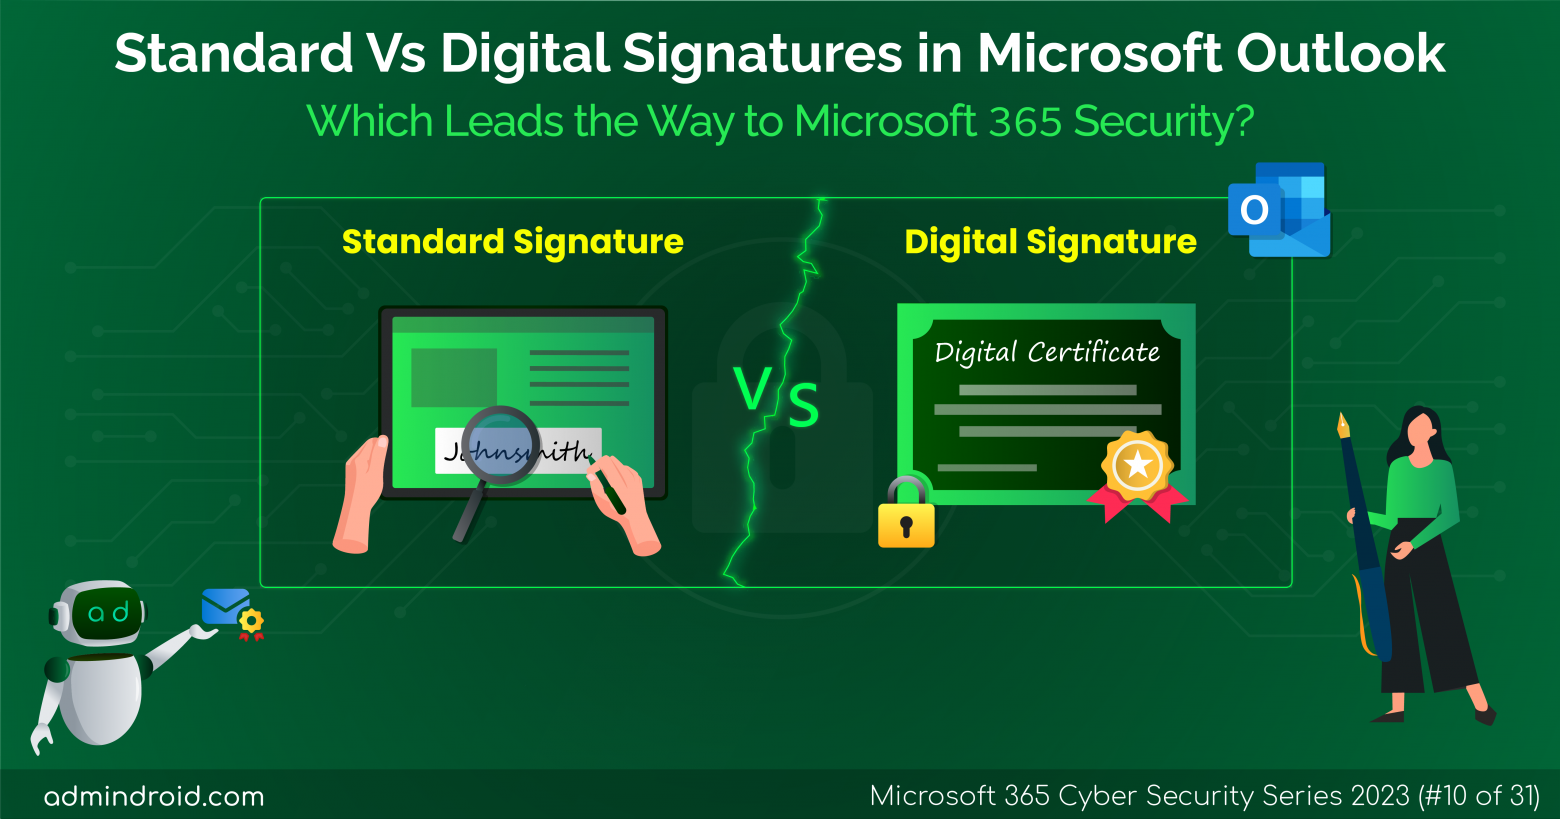 Standard Signatures vs Digital Signatures in Microsoft Outlook 